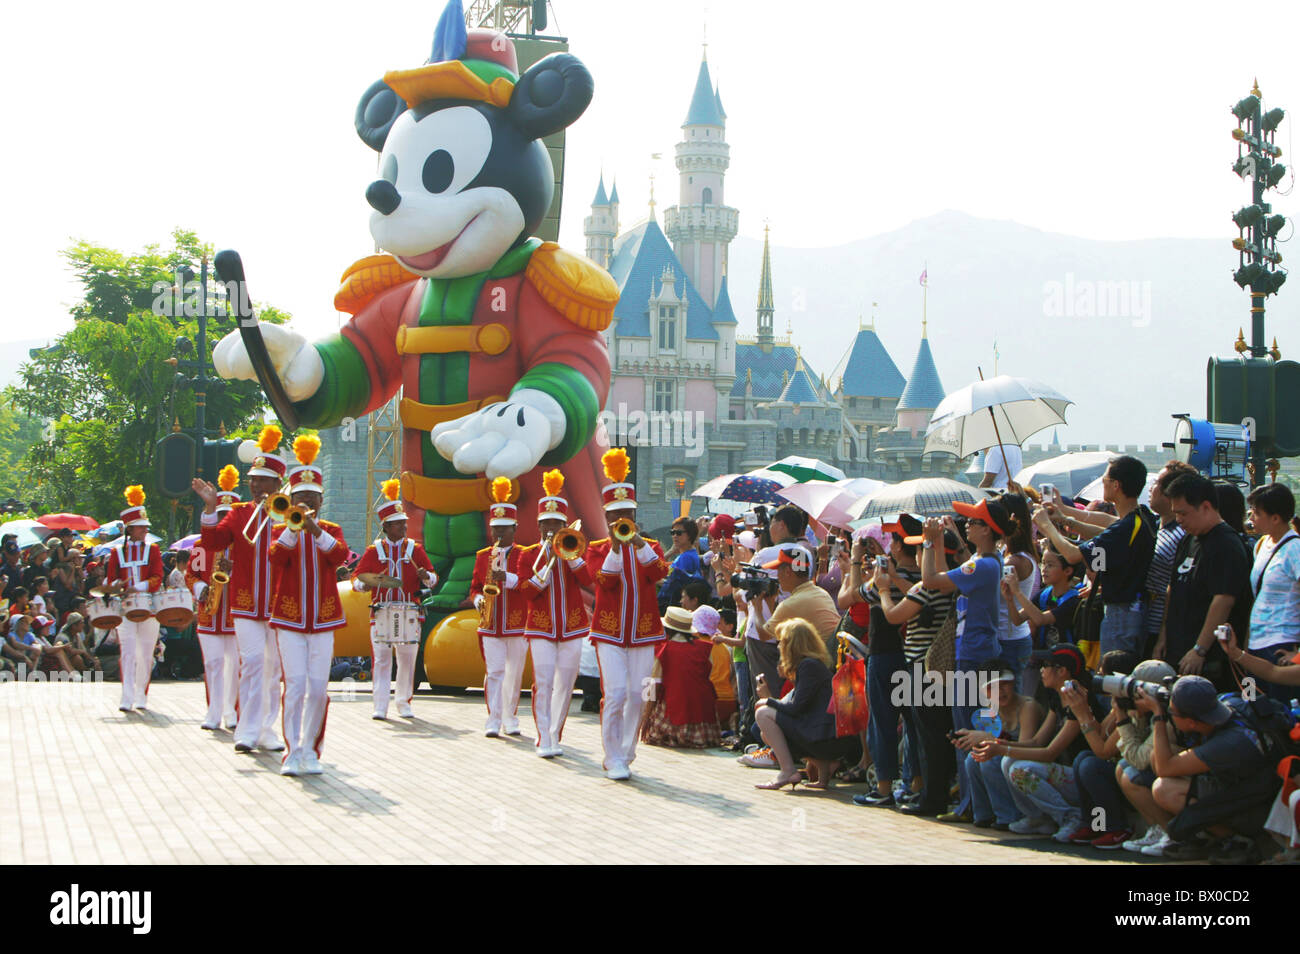 Riesige Mickey Mouse Schwimmer während der Parade, Fantasyland, Hong Kong Disneyland, Lantau Island, Hong Kong, China Stockfoto